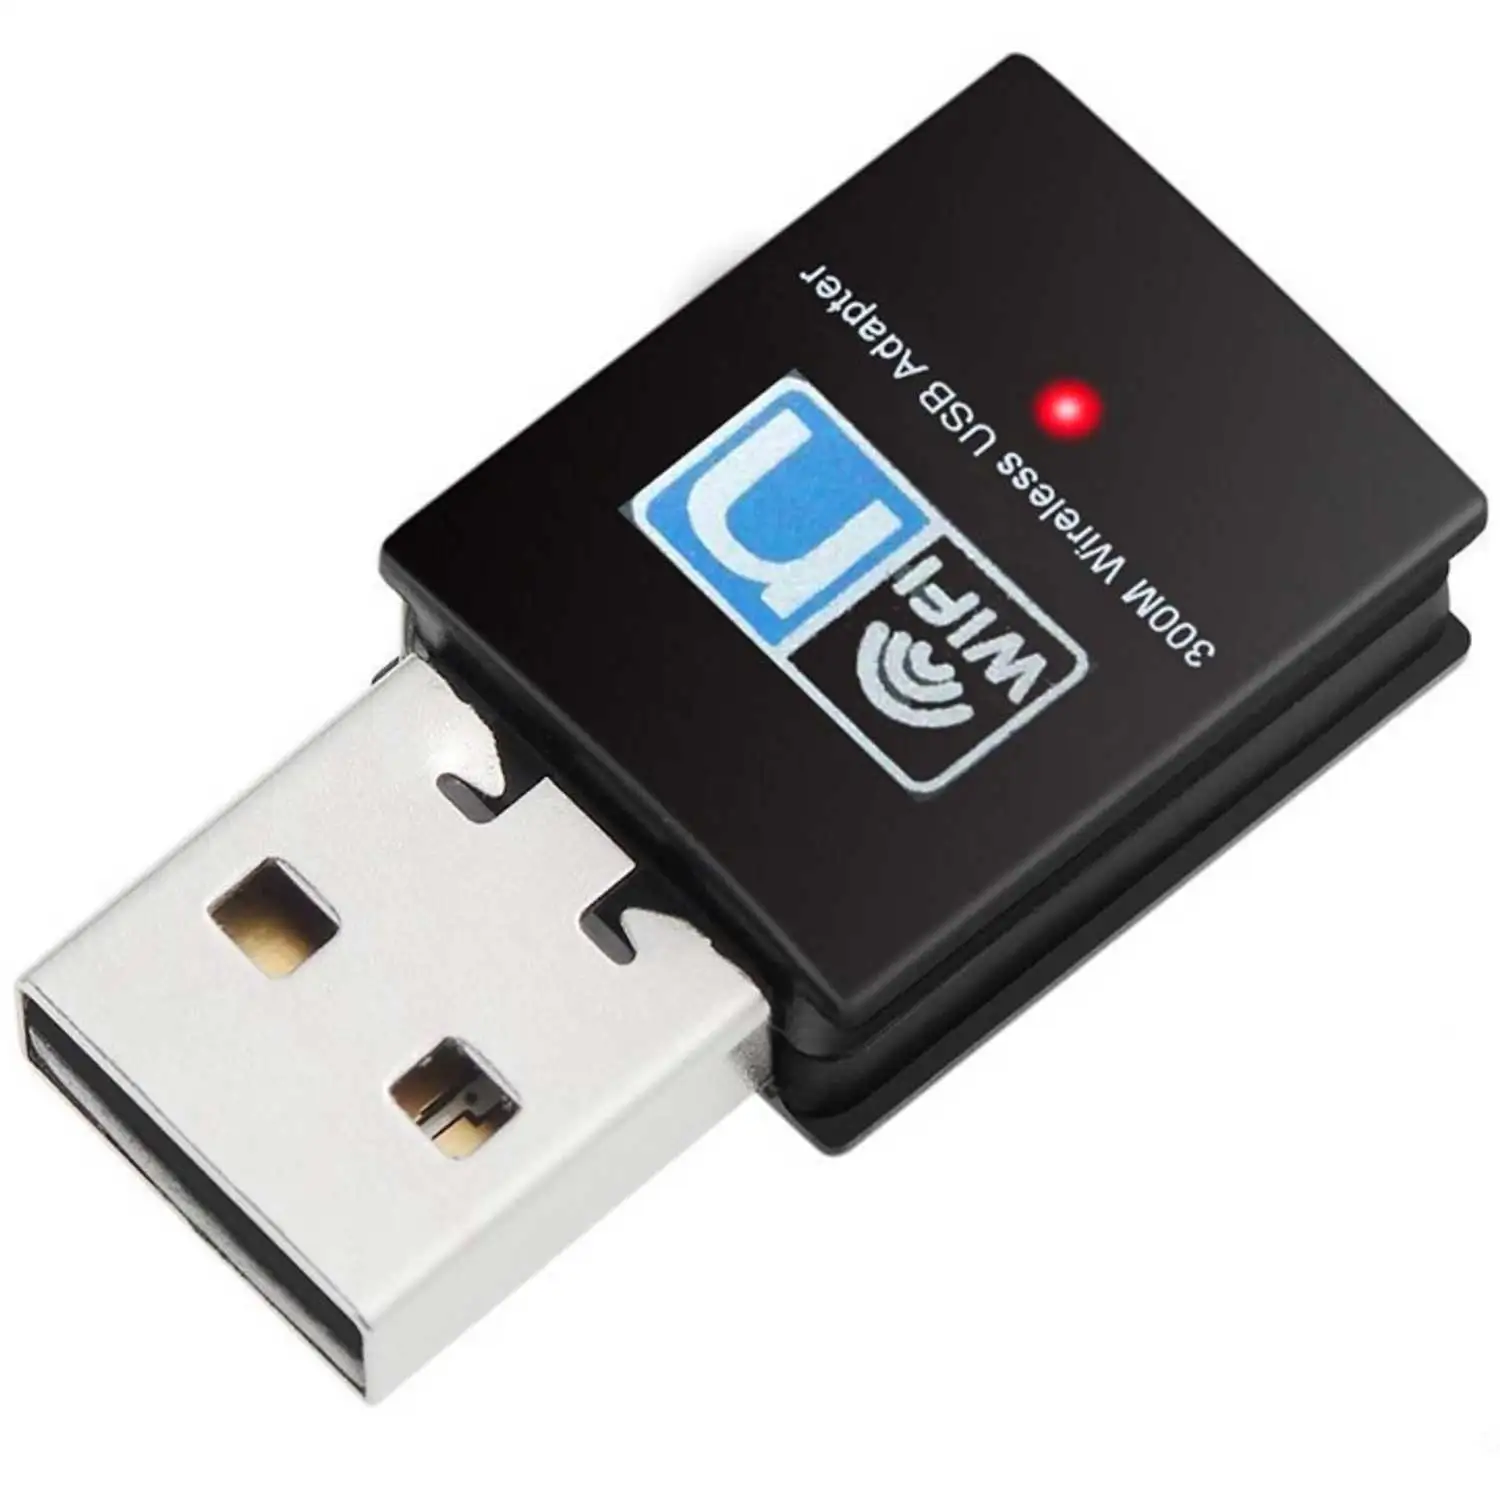 

Wireless Card Mini Pci-E Express To Pci-E 2 Antenna External Pc Wxta Adapter Usb Adaptor Wifi